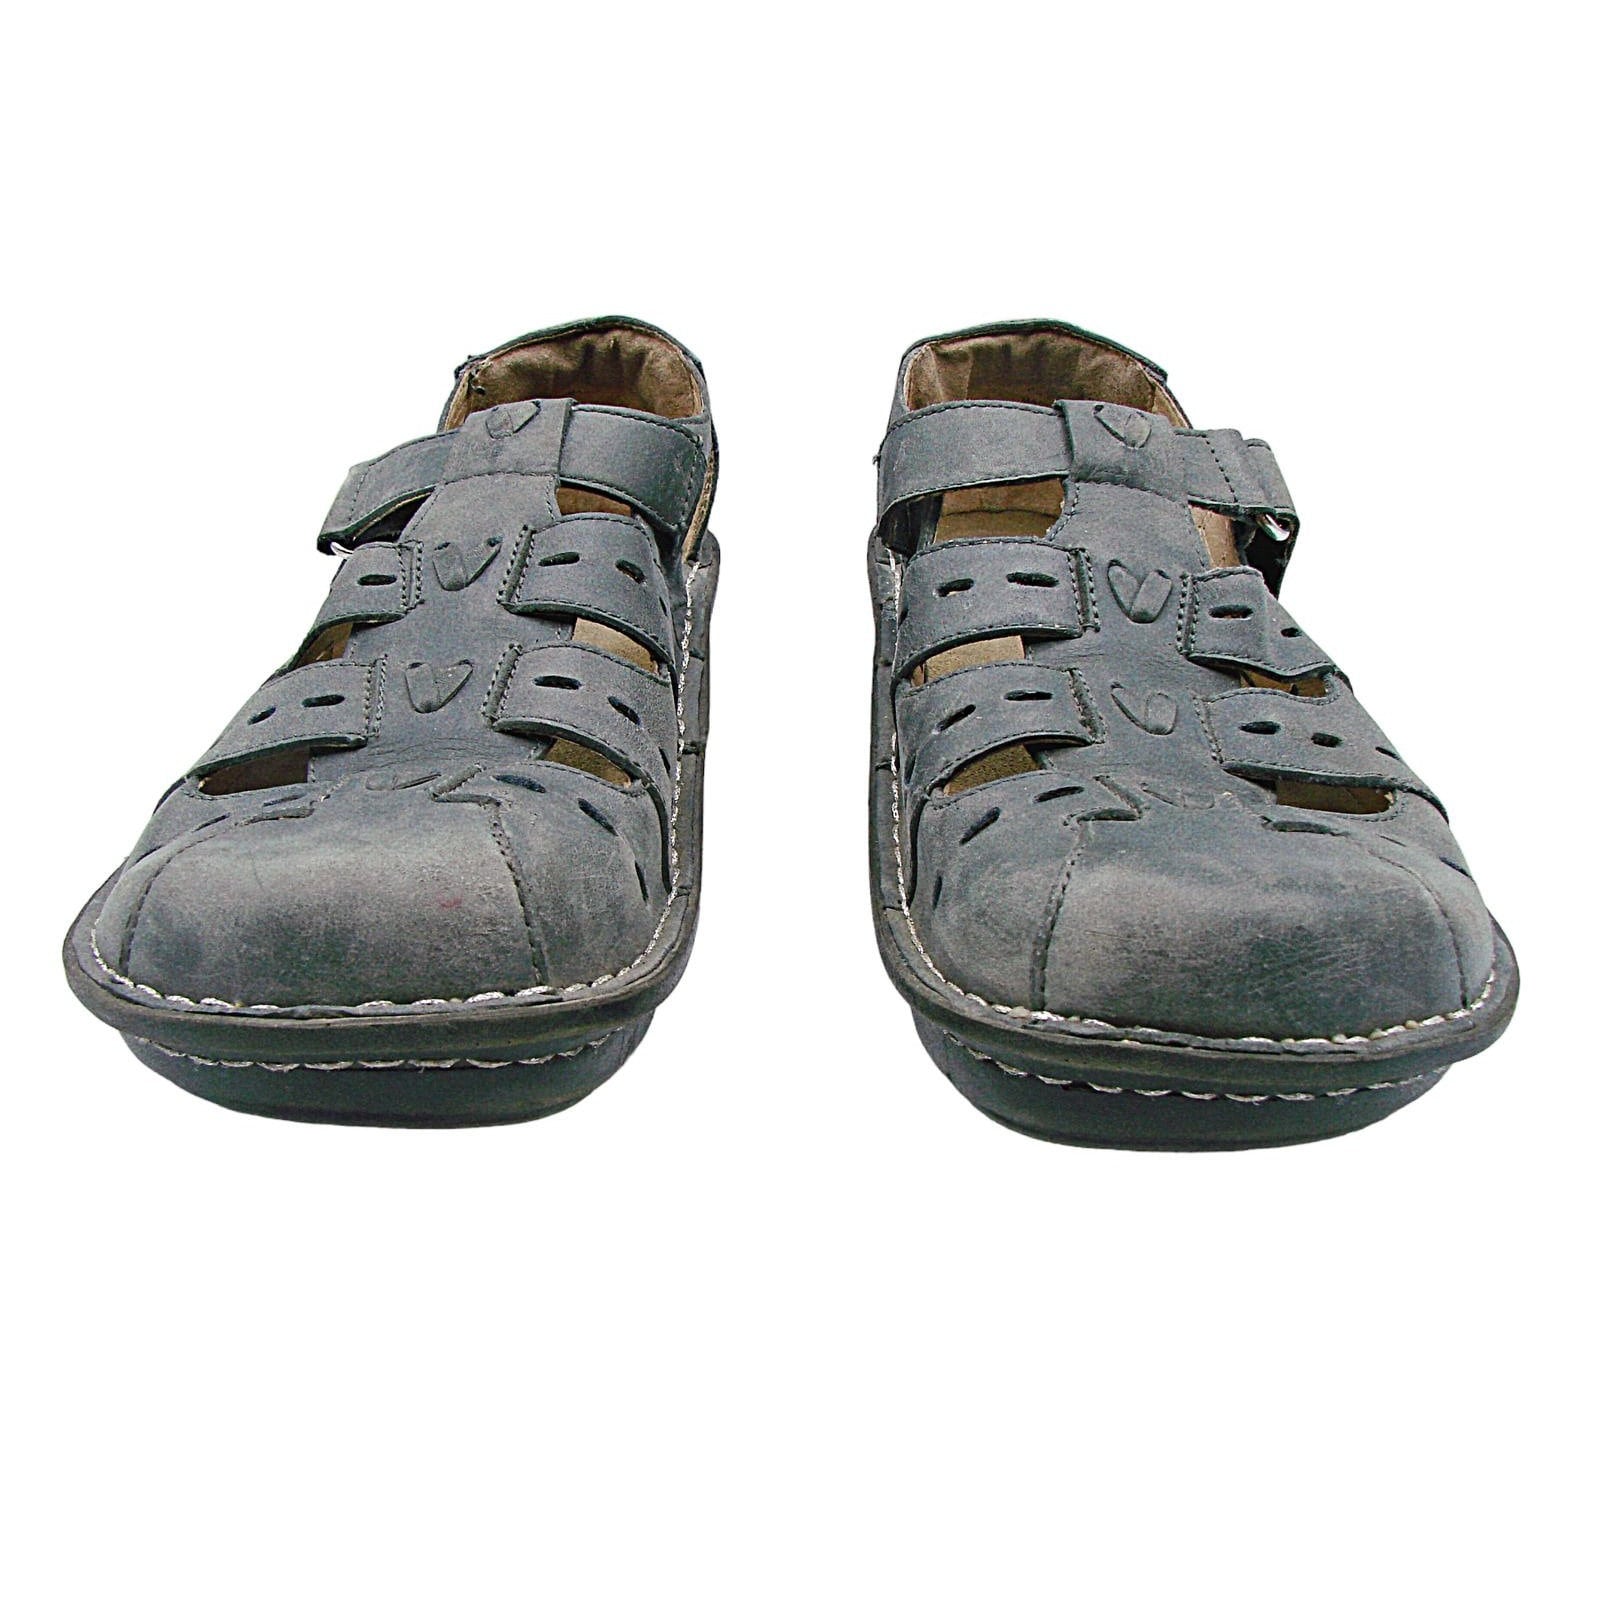 Alegria PG Lite Pesca Shoes Blue Leather Clogs Size 10 Fisherman Sandals  PES-630 